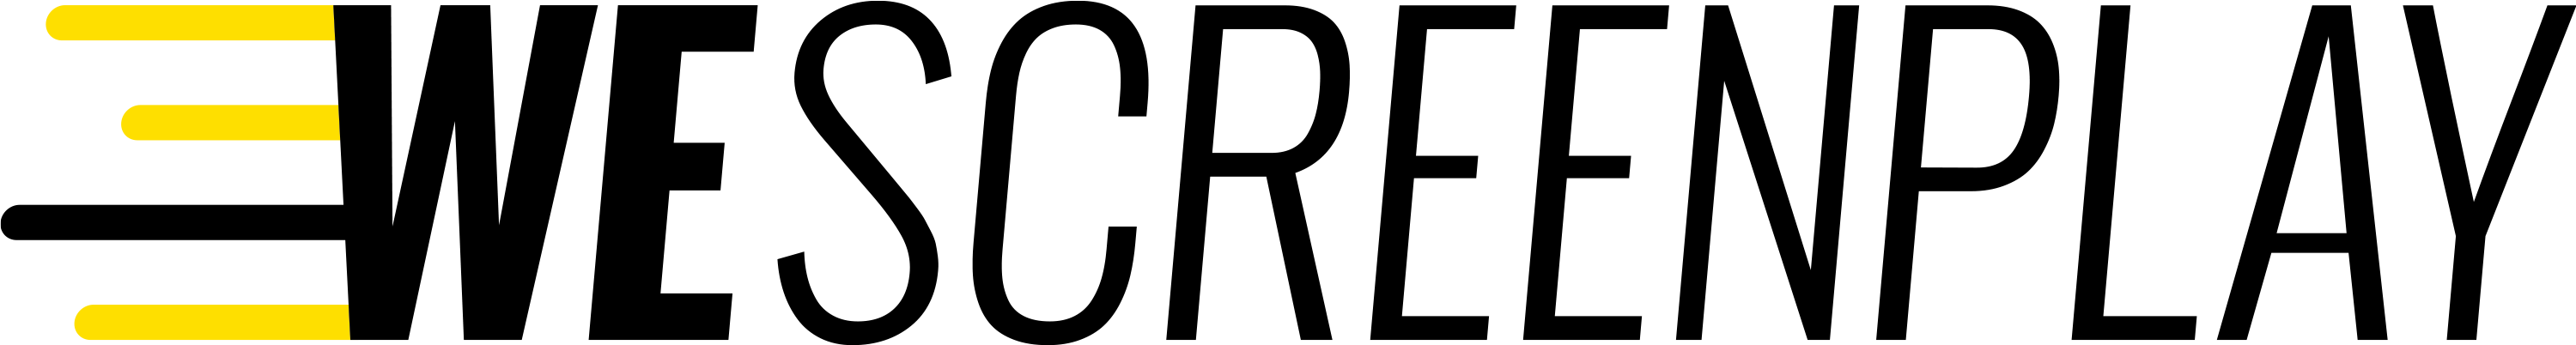 WeScreenplay logo